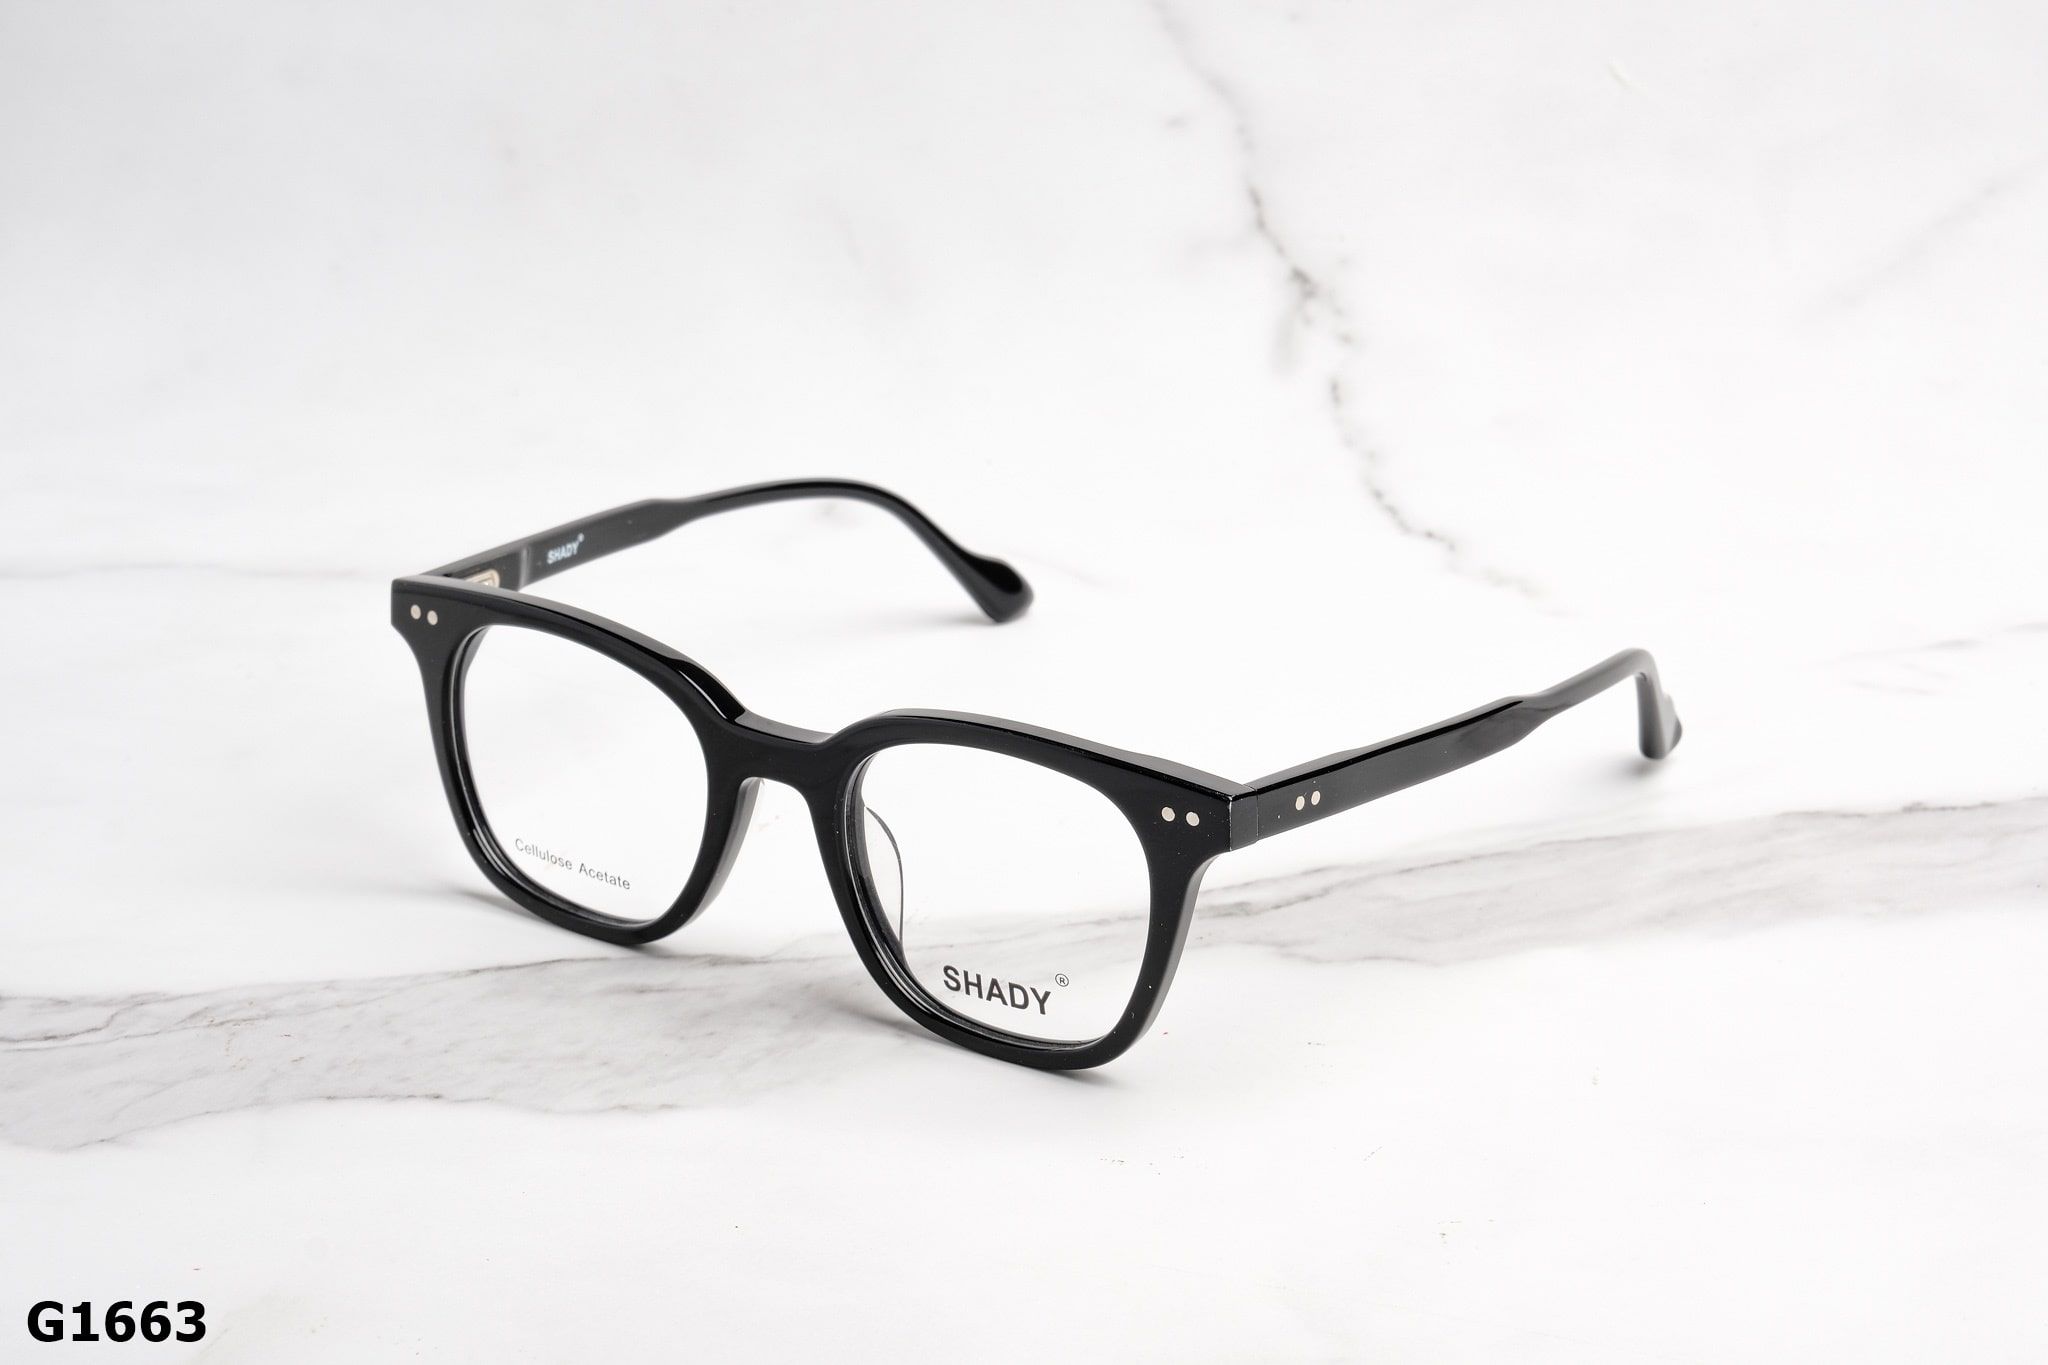  SHADY Eyewear - Glasses - G1663 